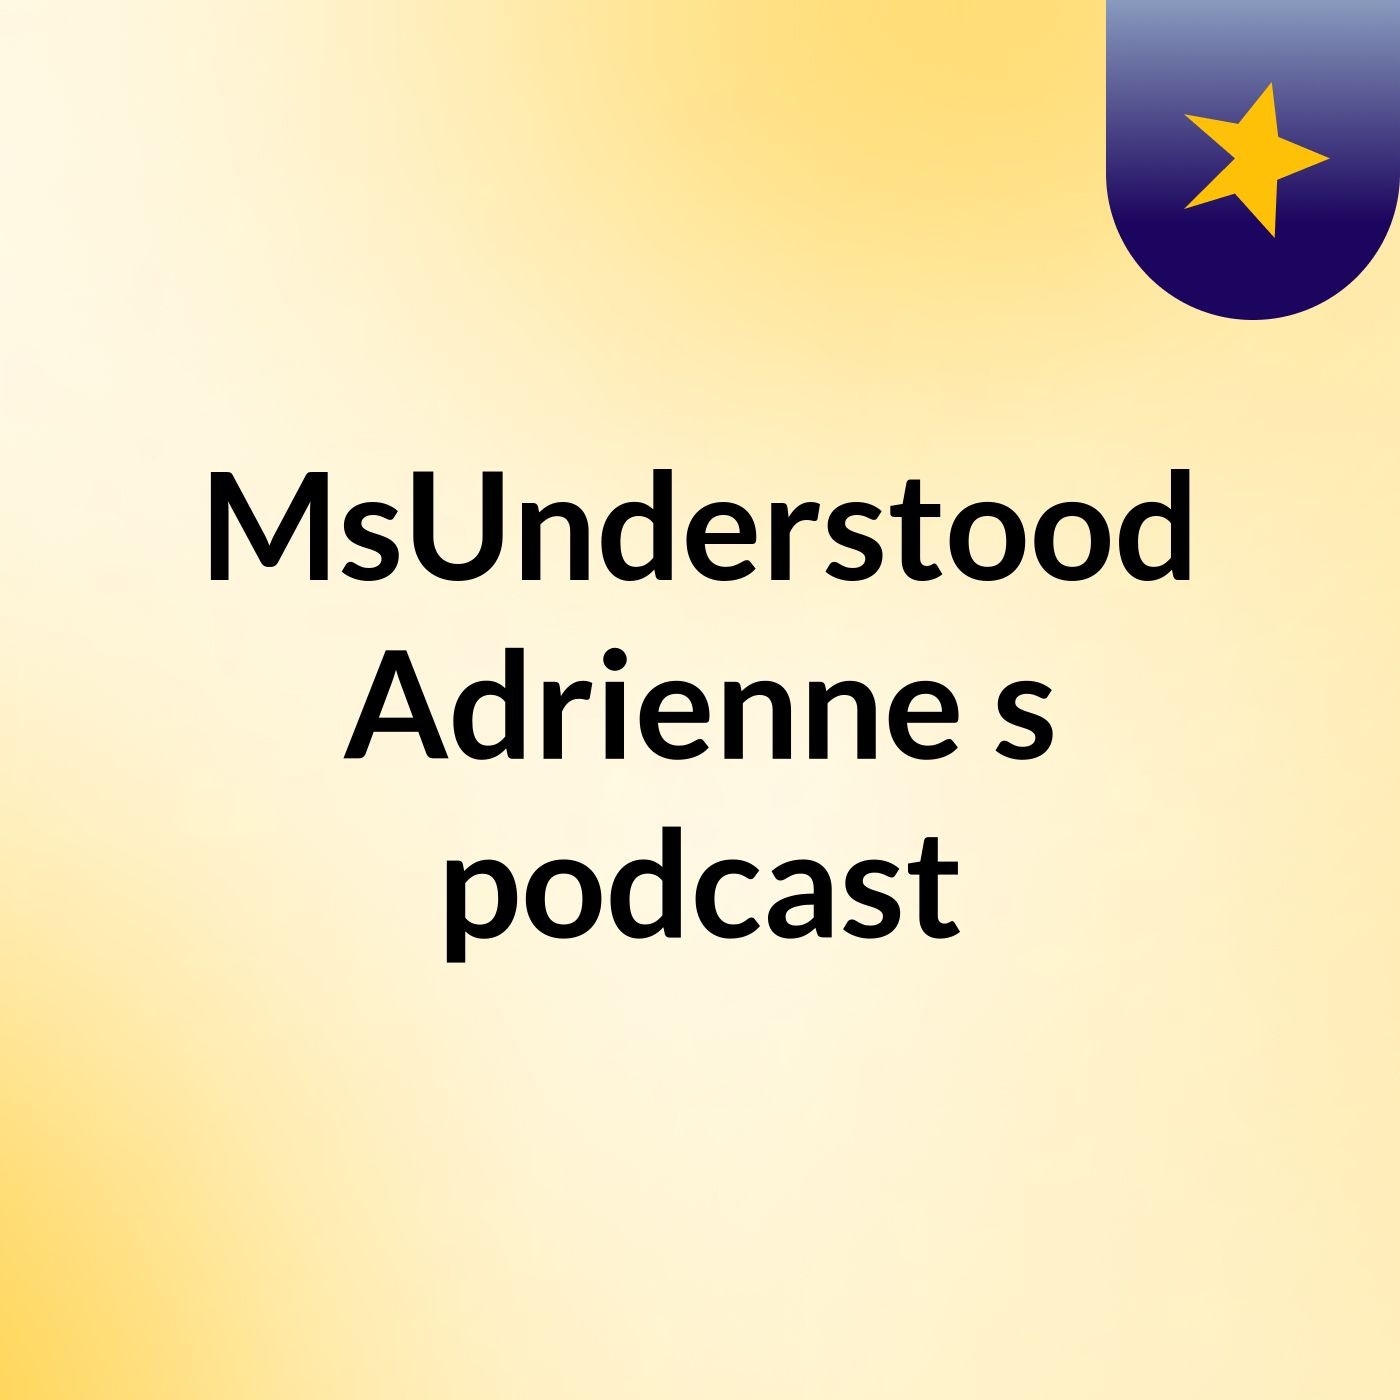 Episode 3 - MsUnderstood Adrienne's podcast